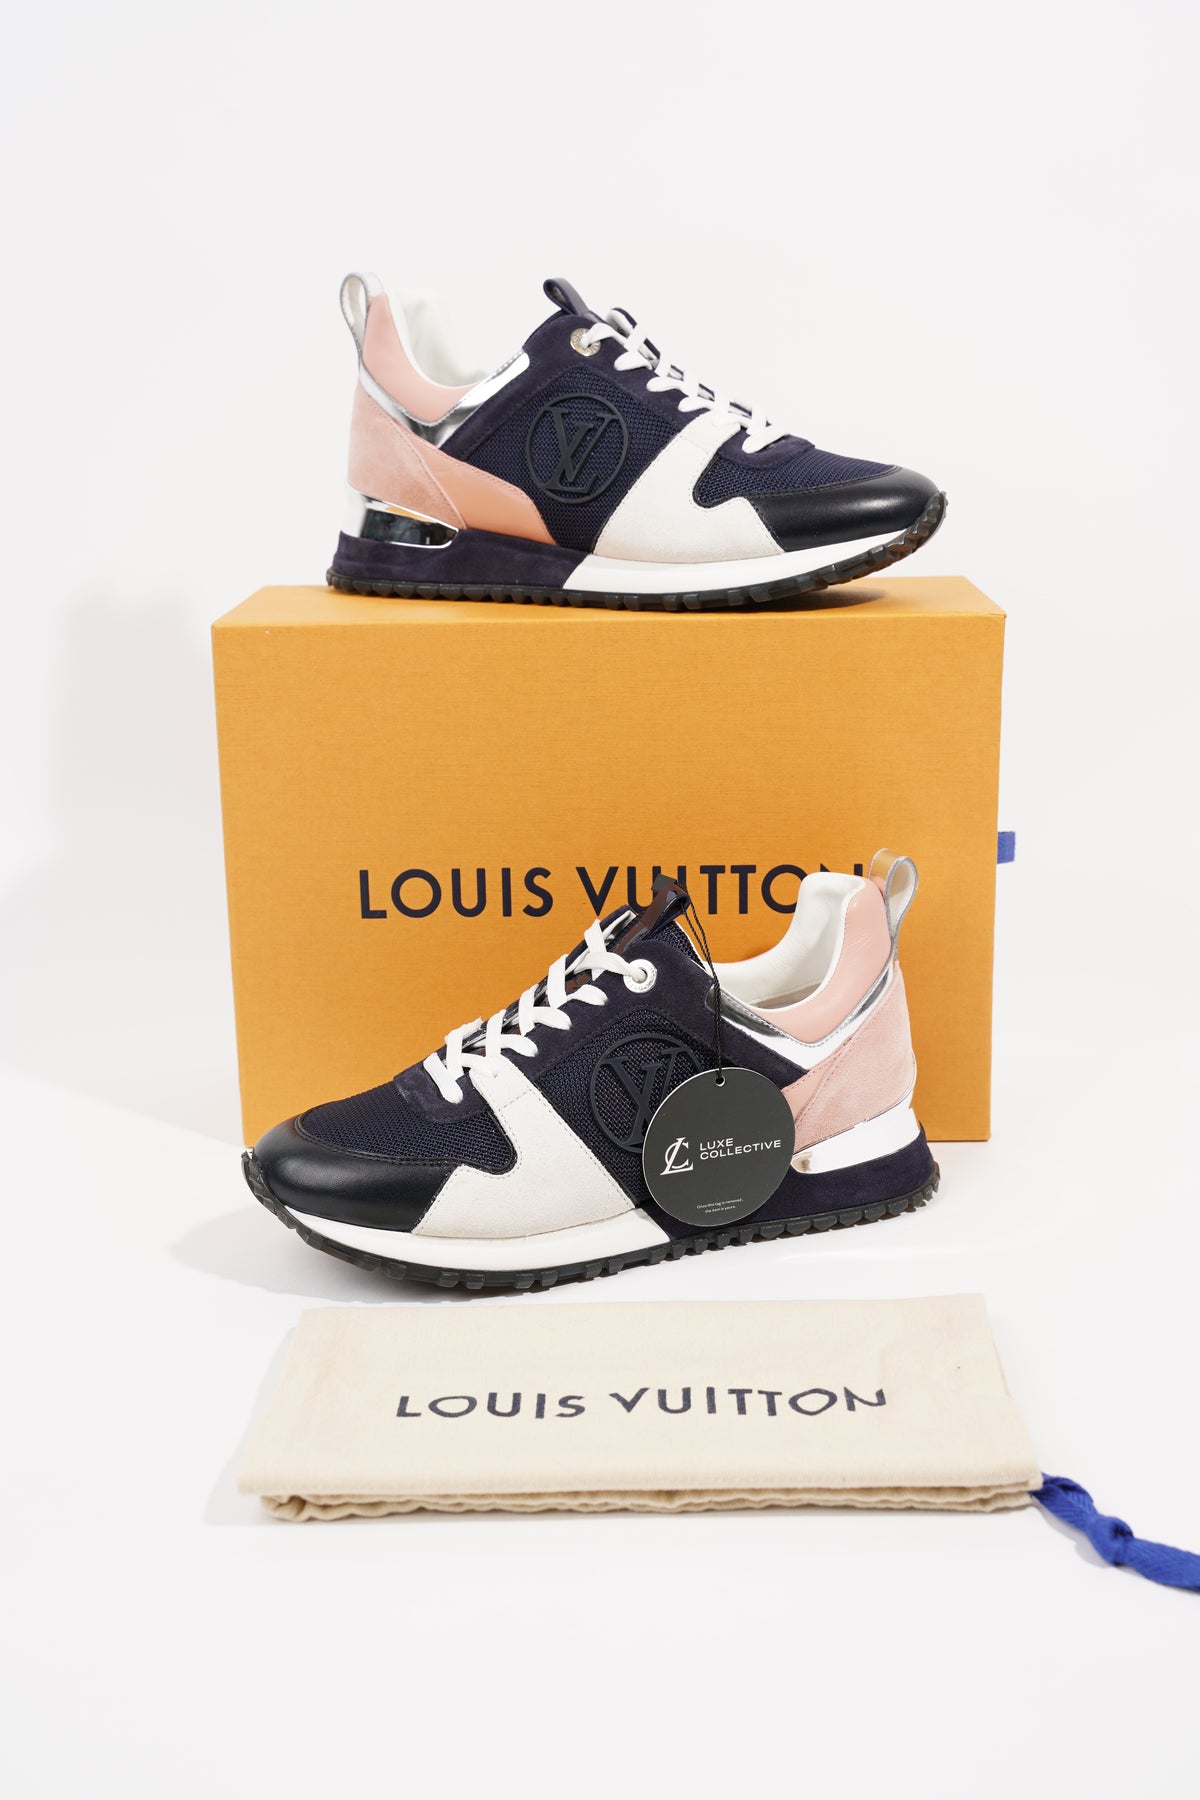 Louis Vuitton Pink Suede Run Away Trainers UK 3.5 EU 36.5 - Louis Vuitton / Pink / UK 3.5 EU 36.5